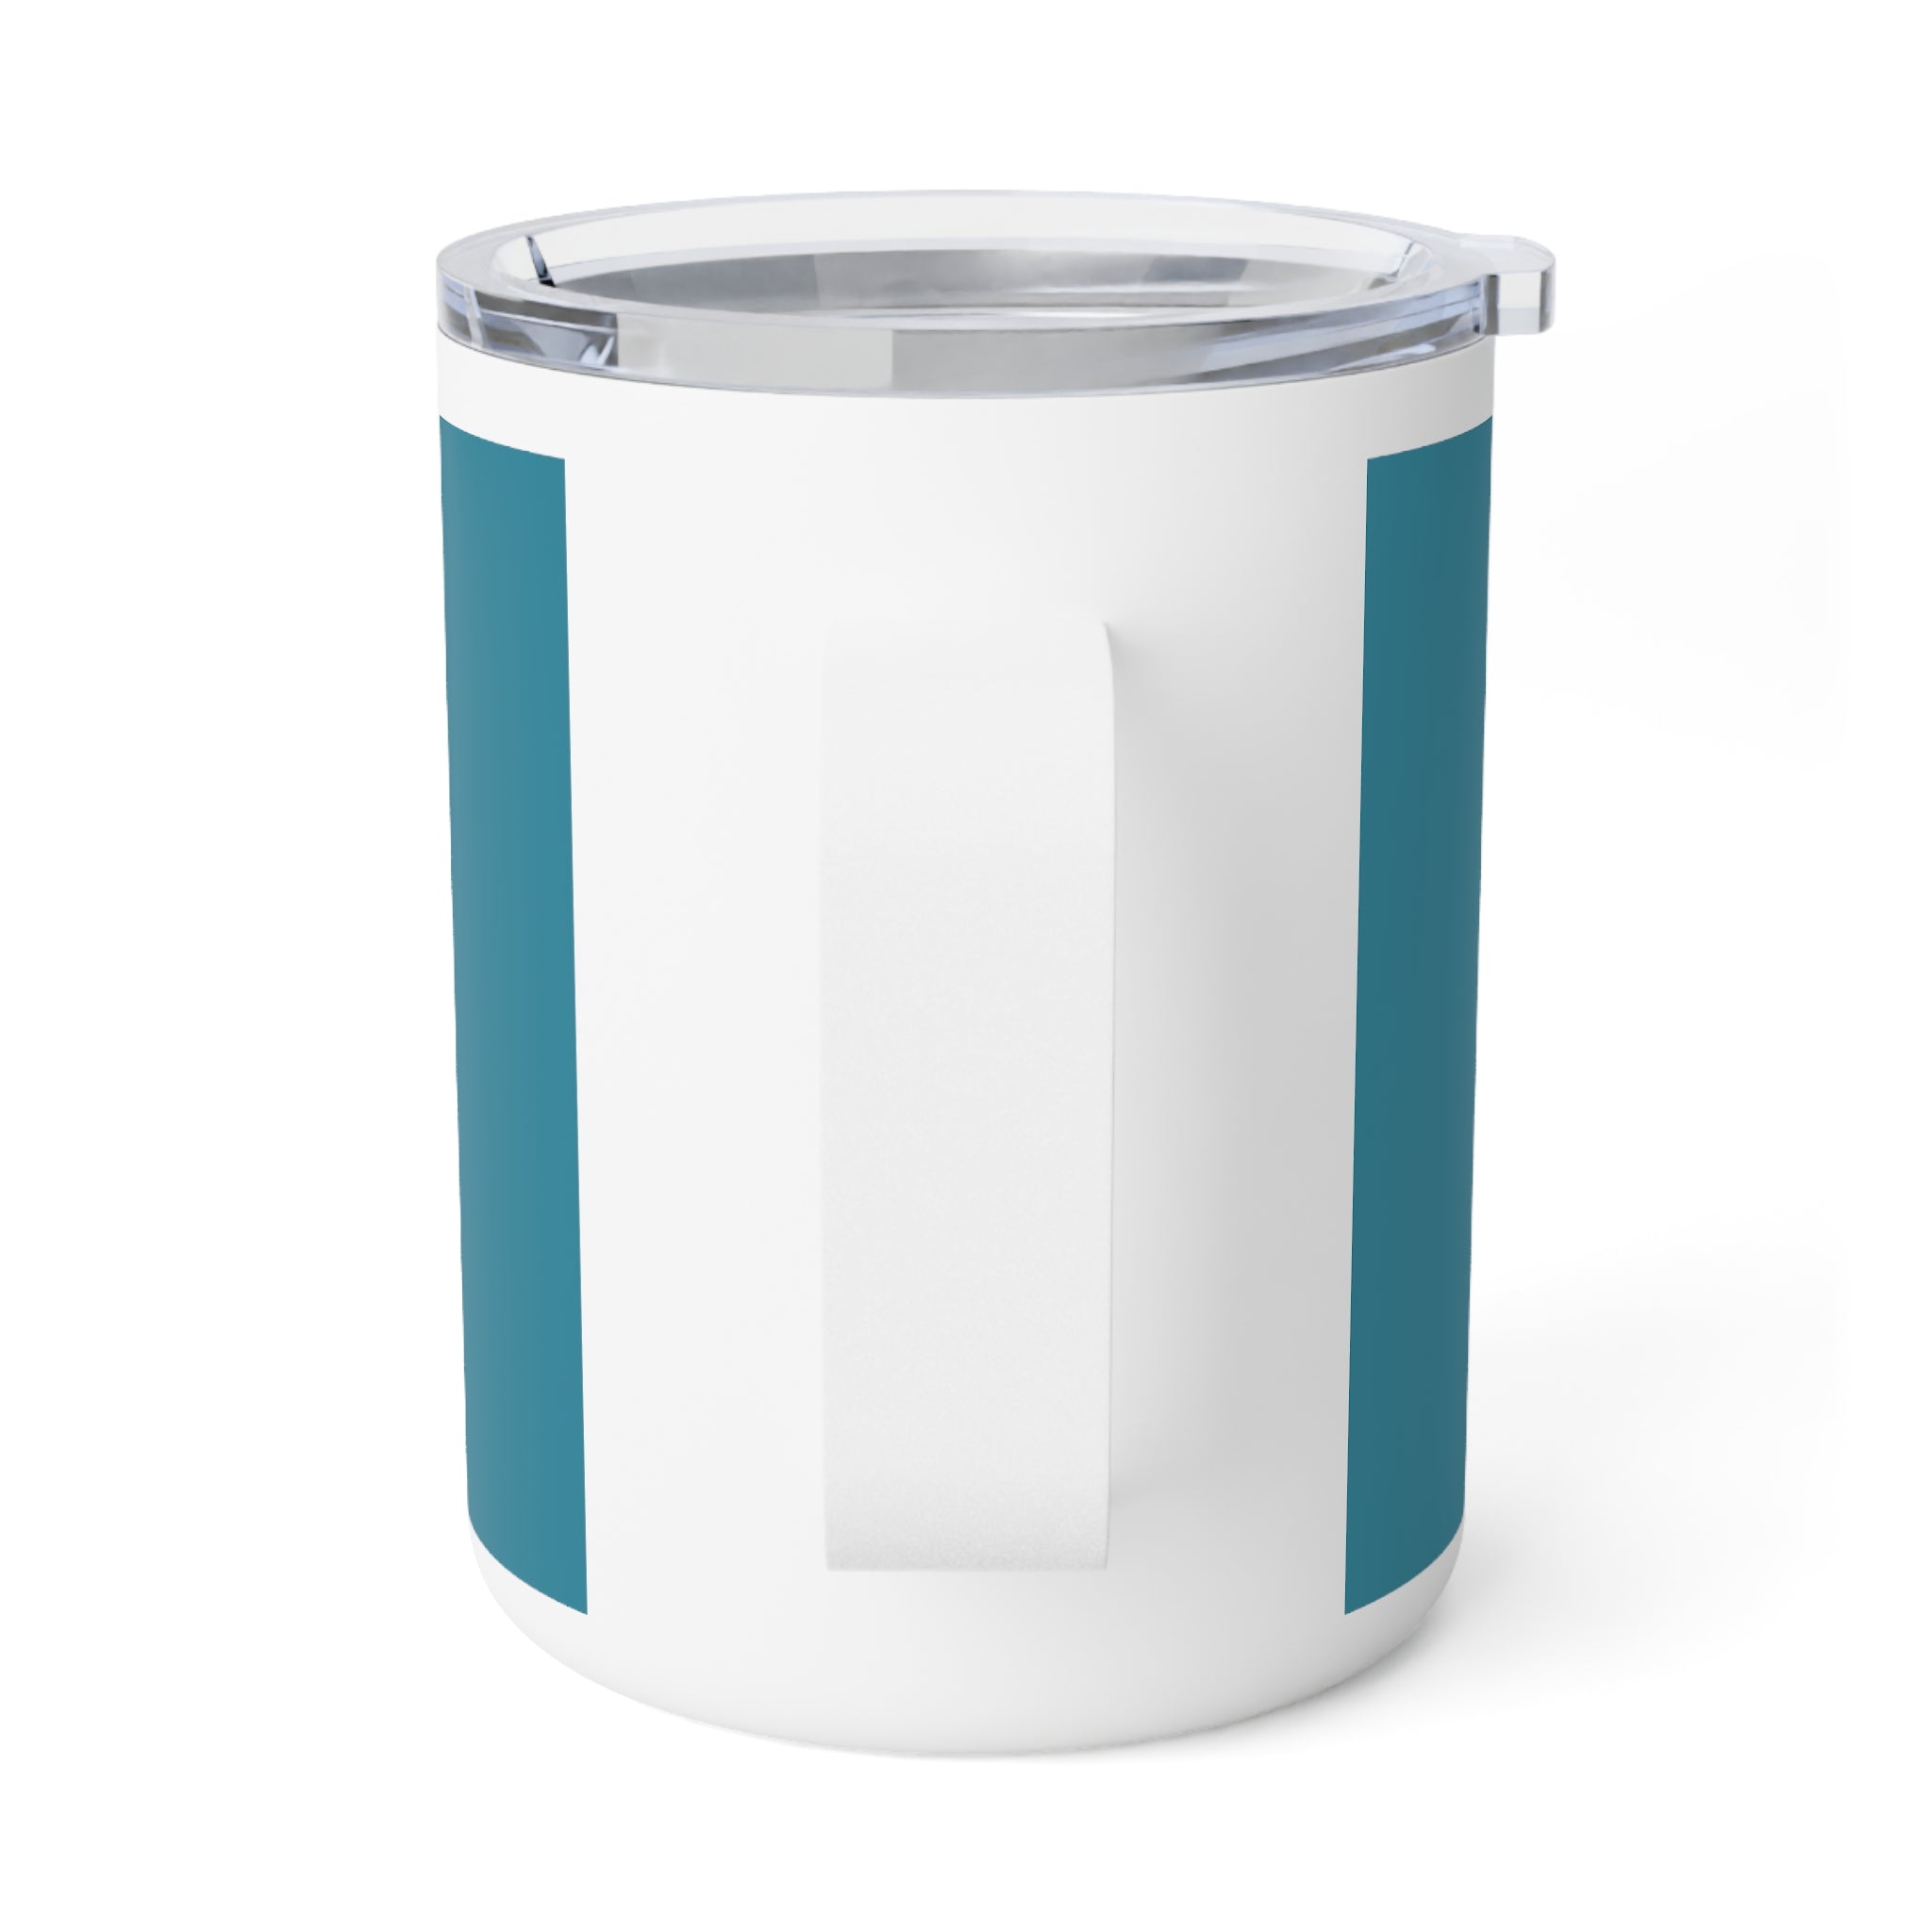 Insulated Christmas Coffee Mug, 10oz Blue